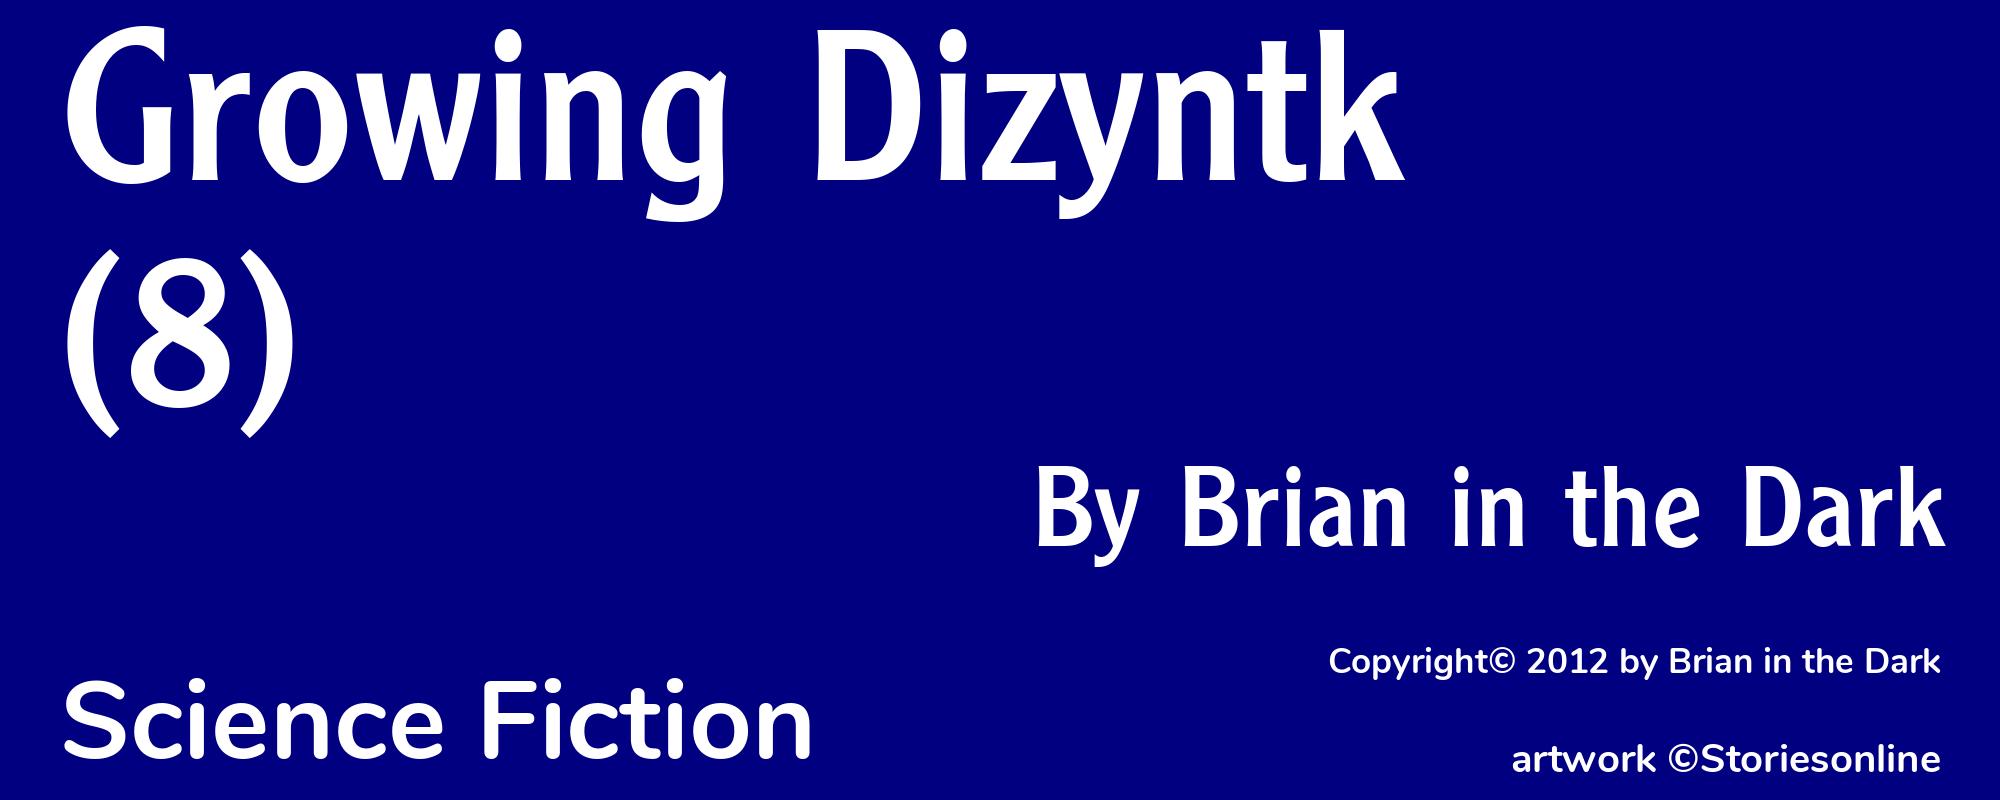 Growing Dizyntk (8) - Cover